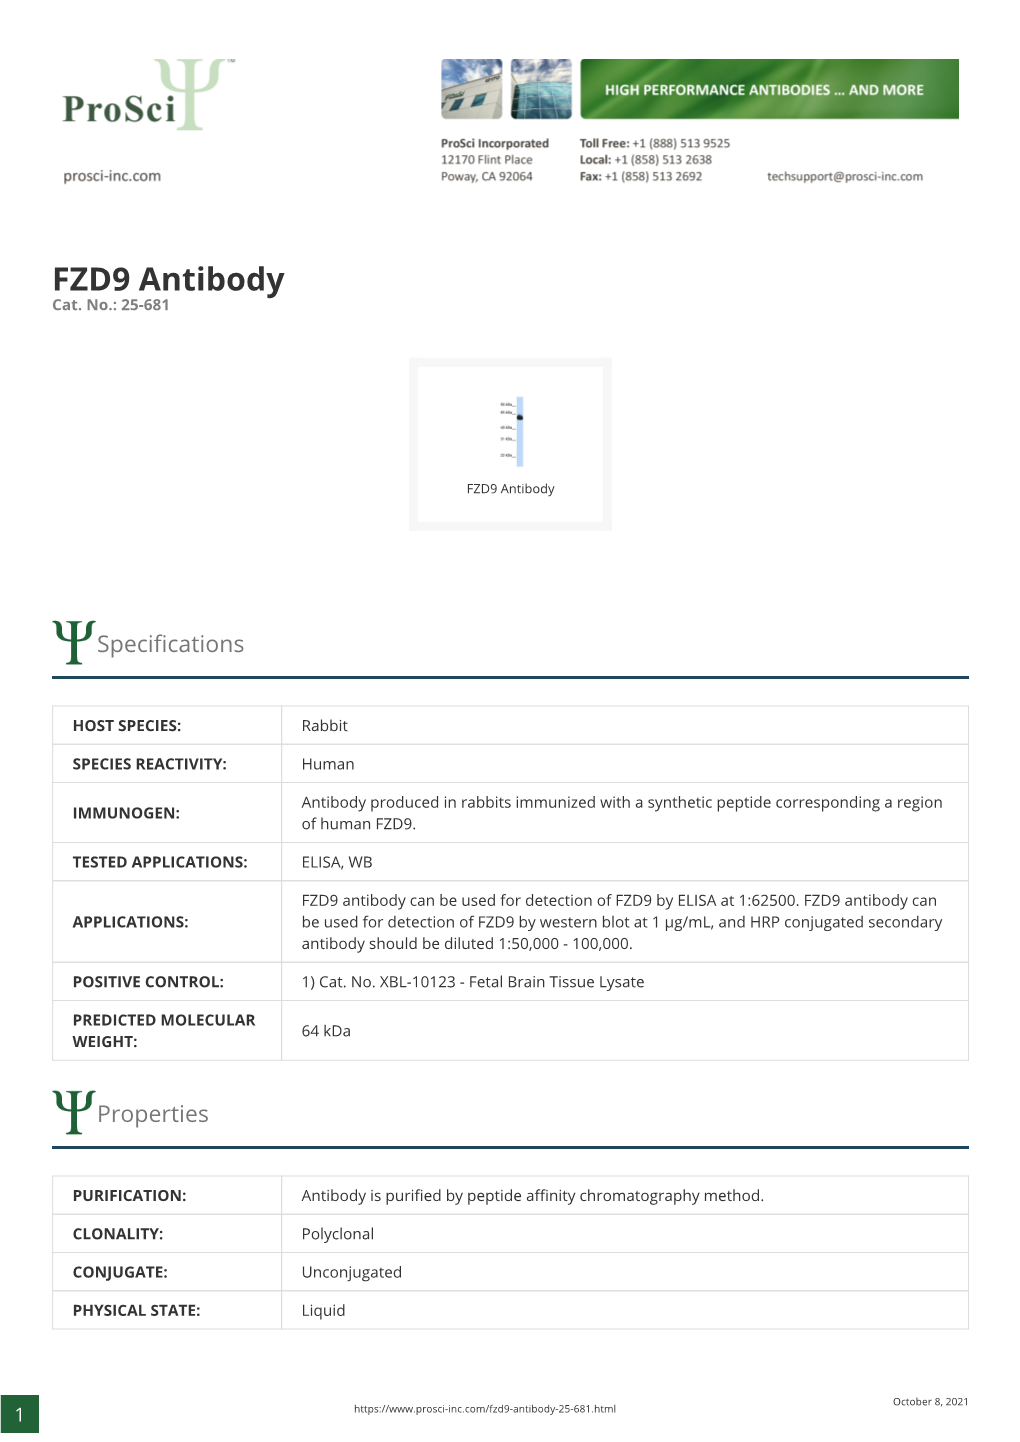 FZD9 Antibody Cat